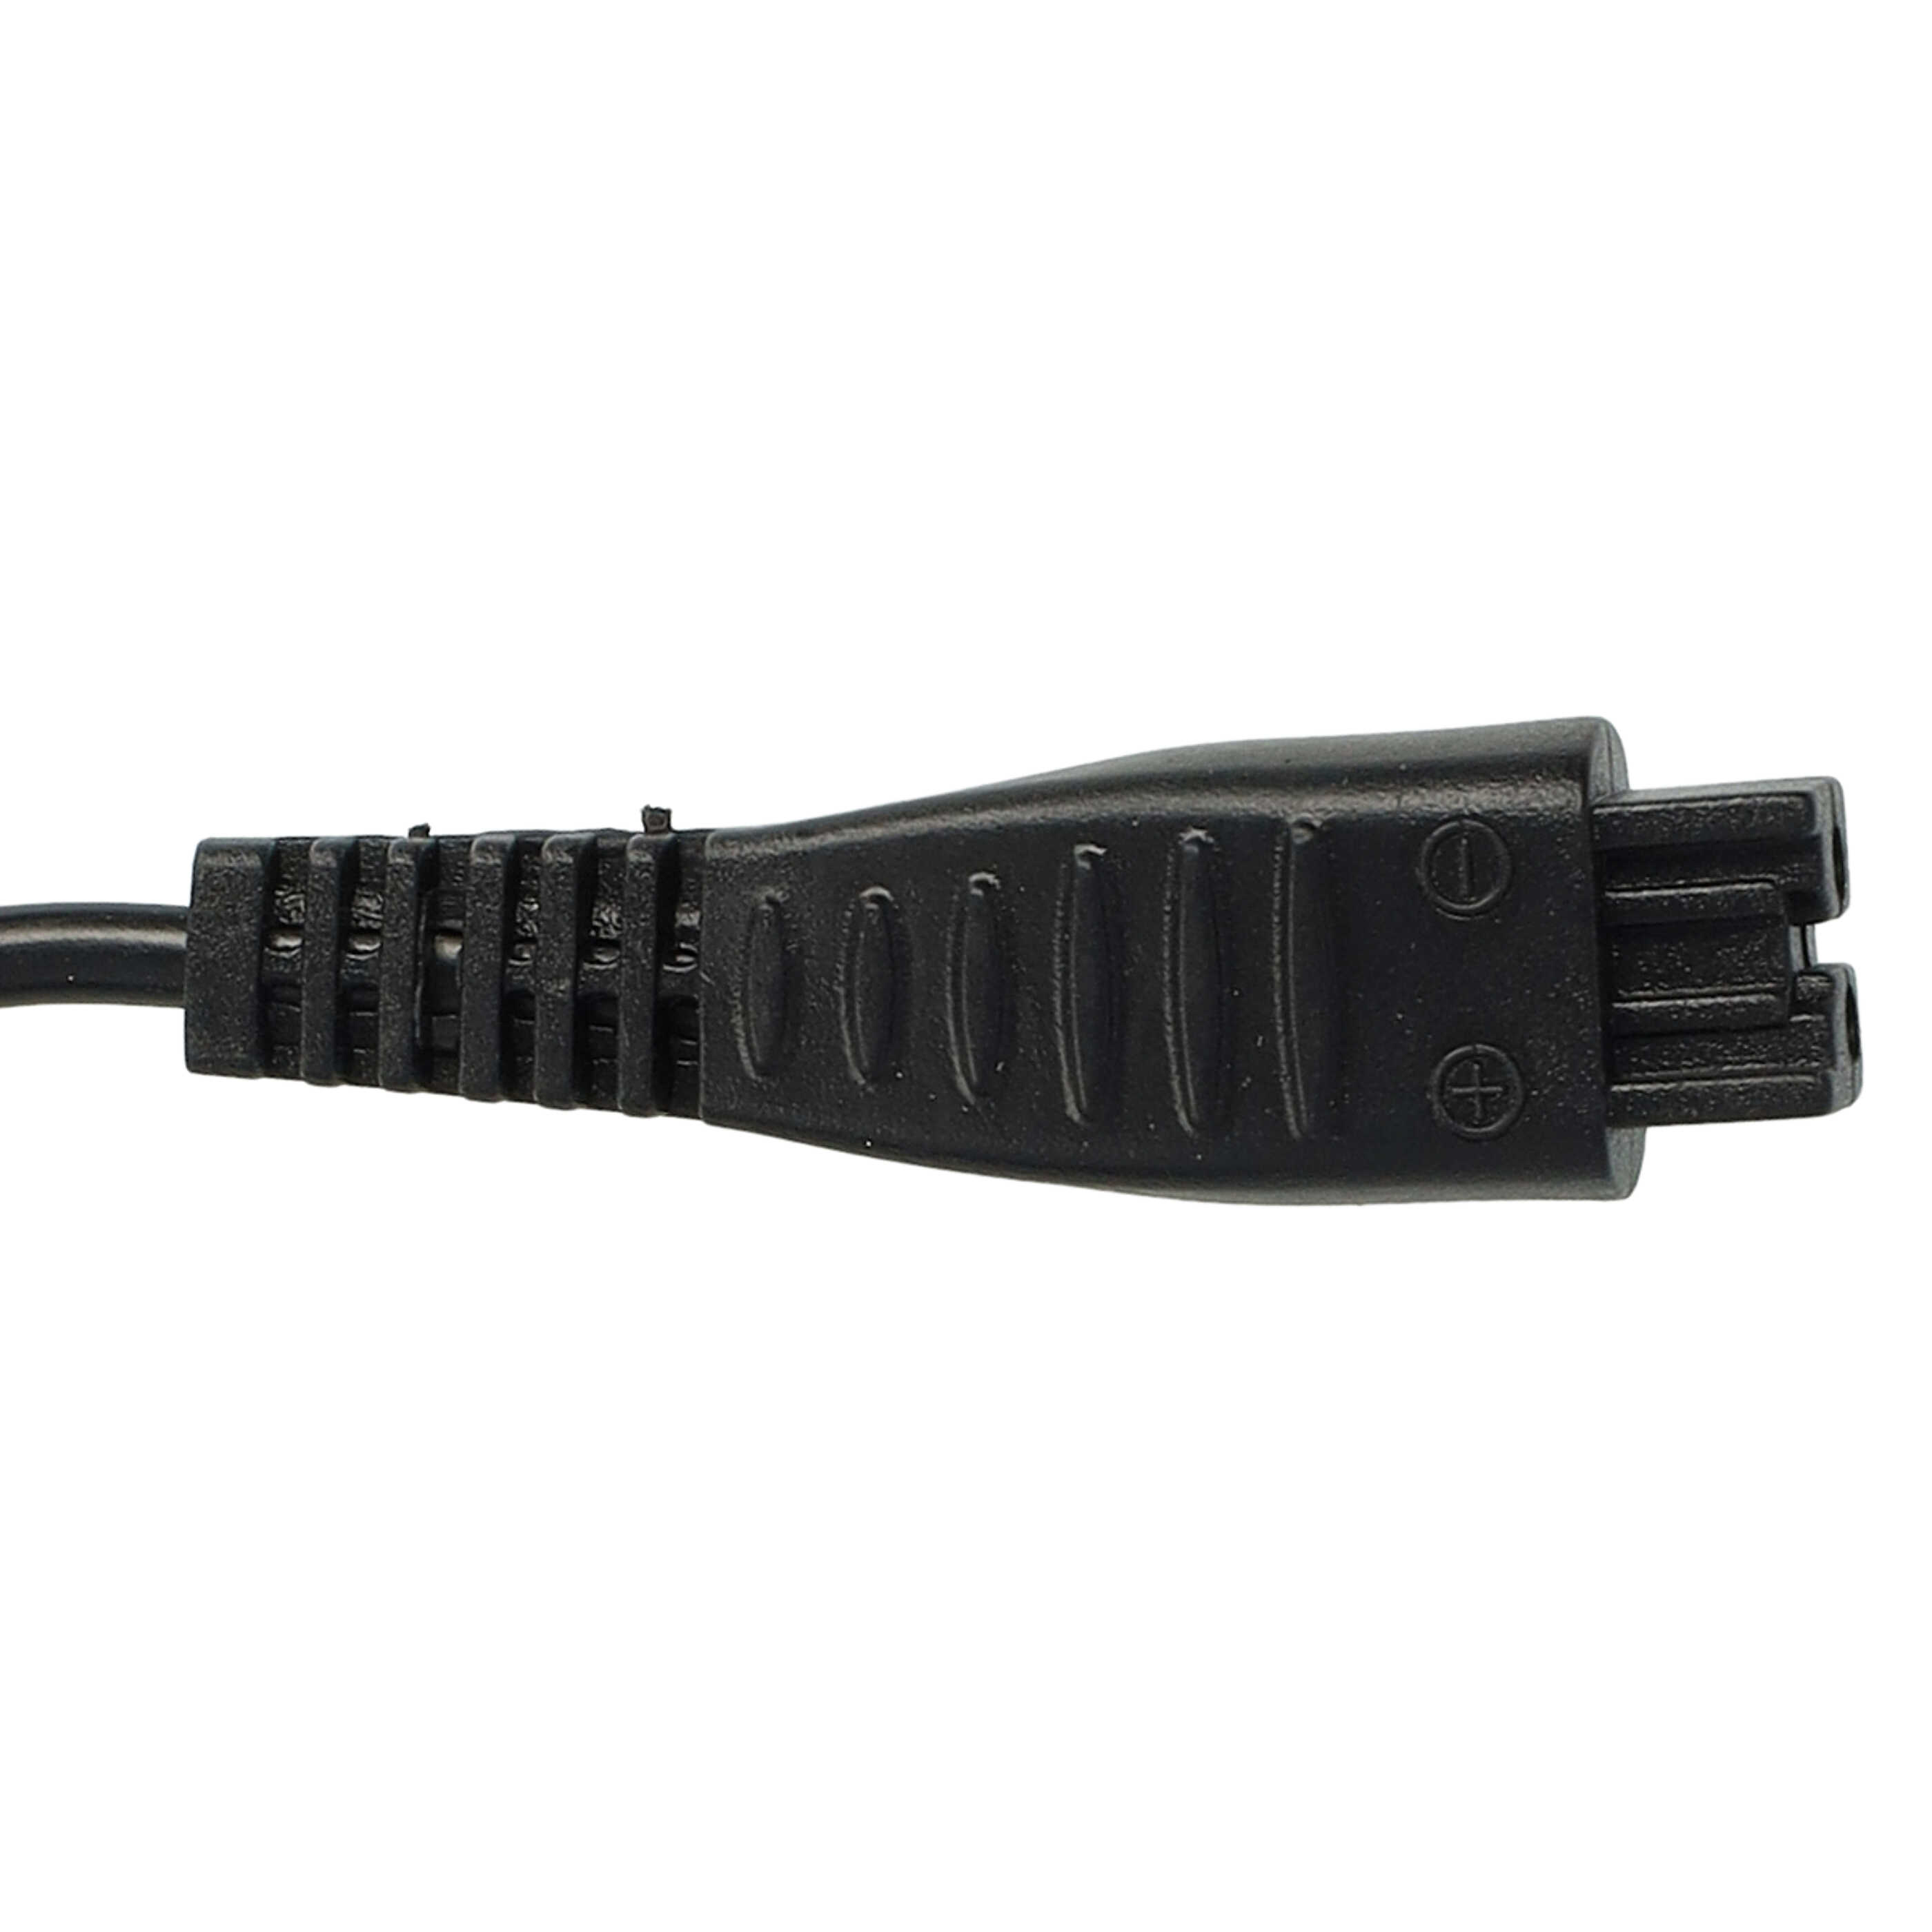 Caricabatterie USB sostituisce Panasonic RE7-59, RE7-68, RE7-51, RE7-40 per rasoio Panasonic - 120 cm